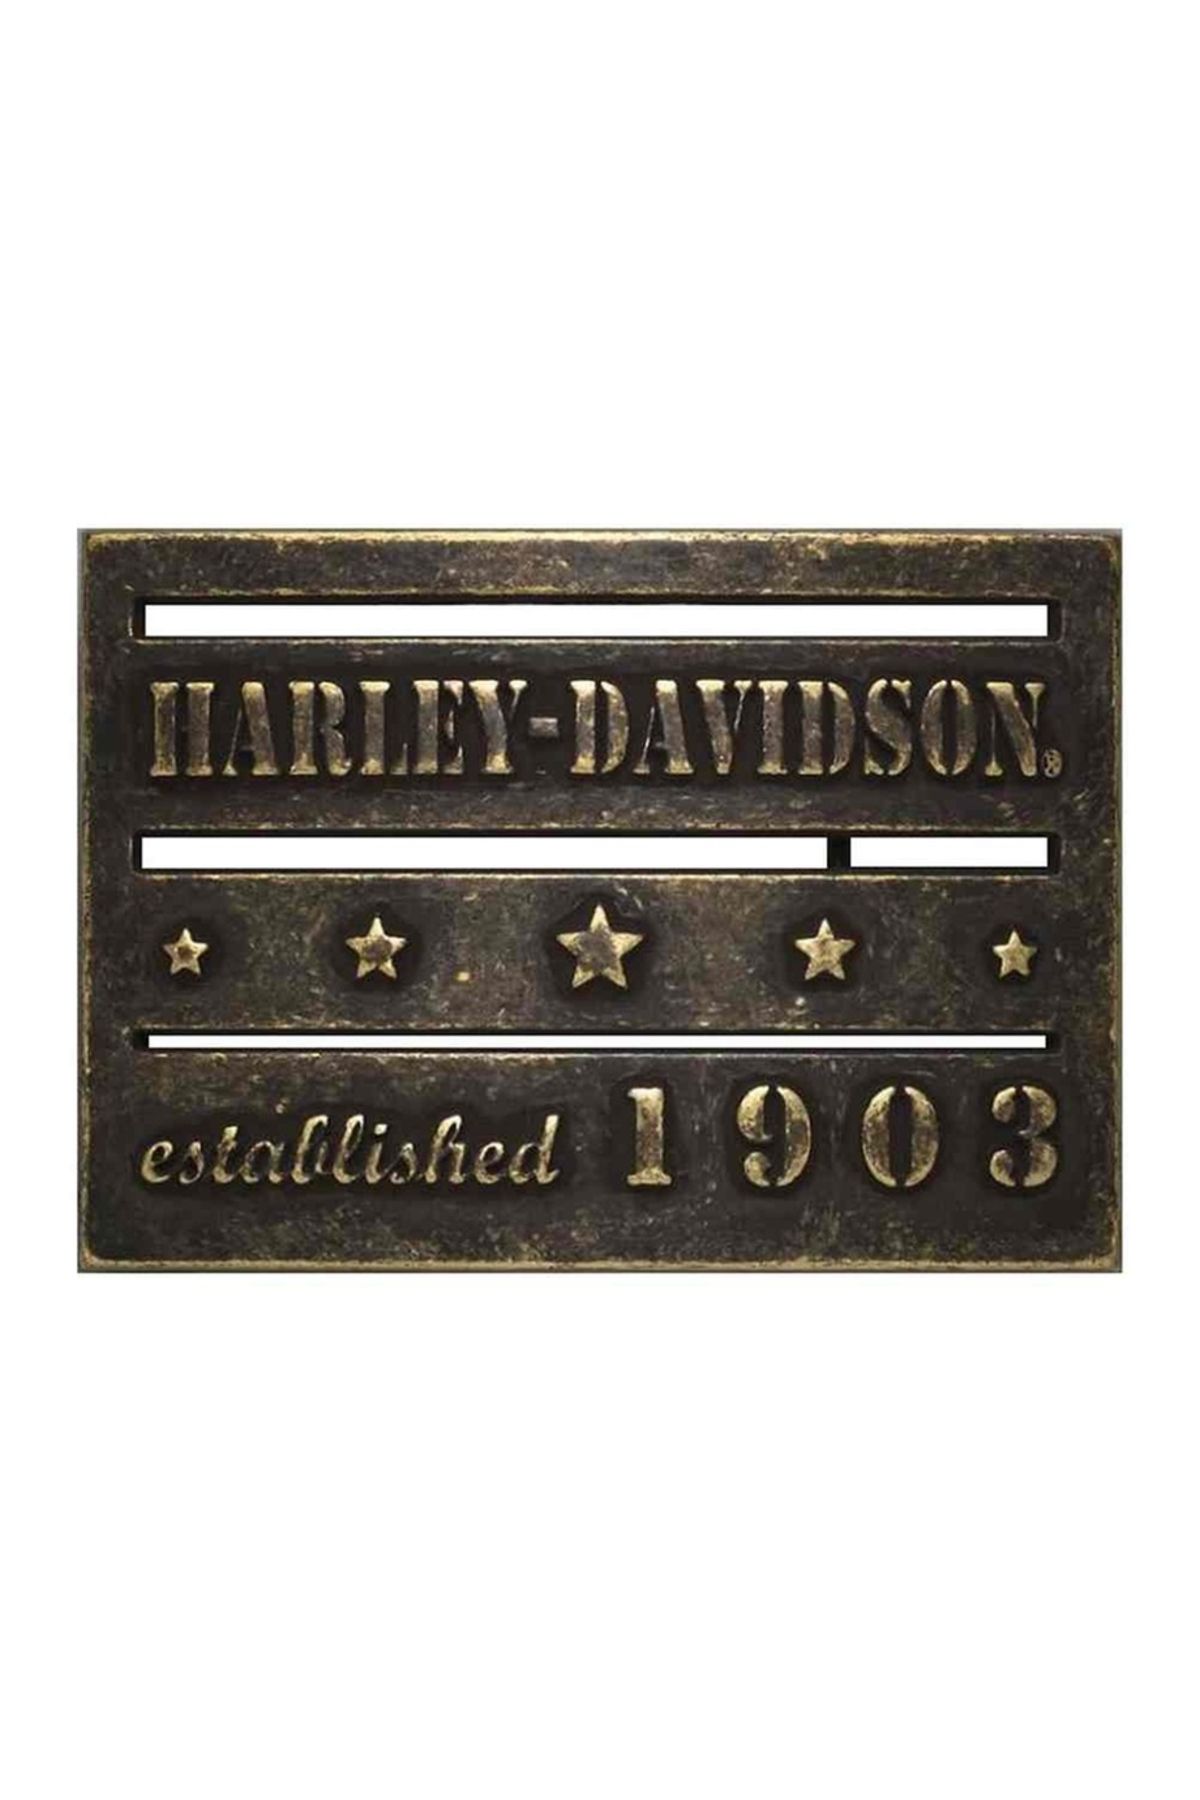 Harley Davidson Harley-davidson Buckle Bl 1903